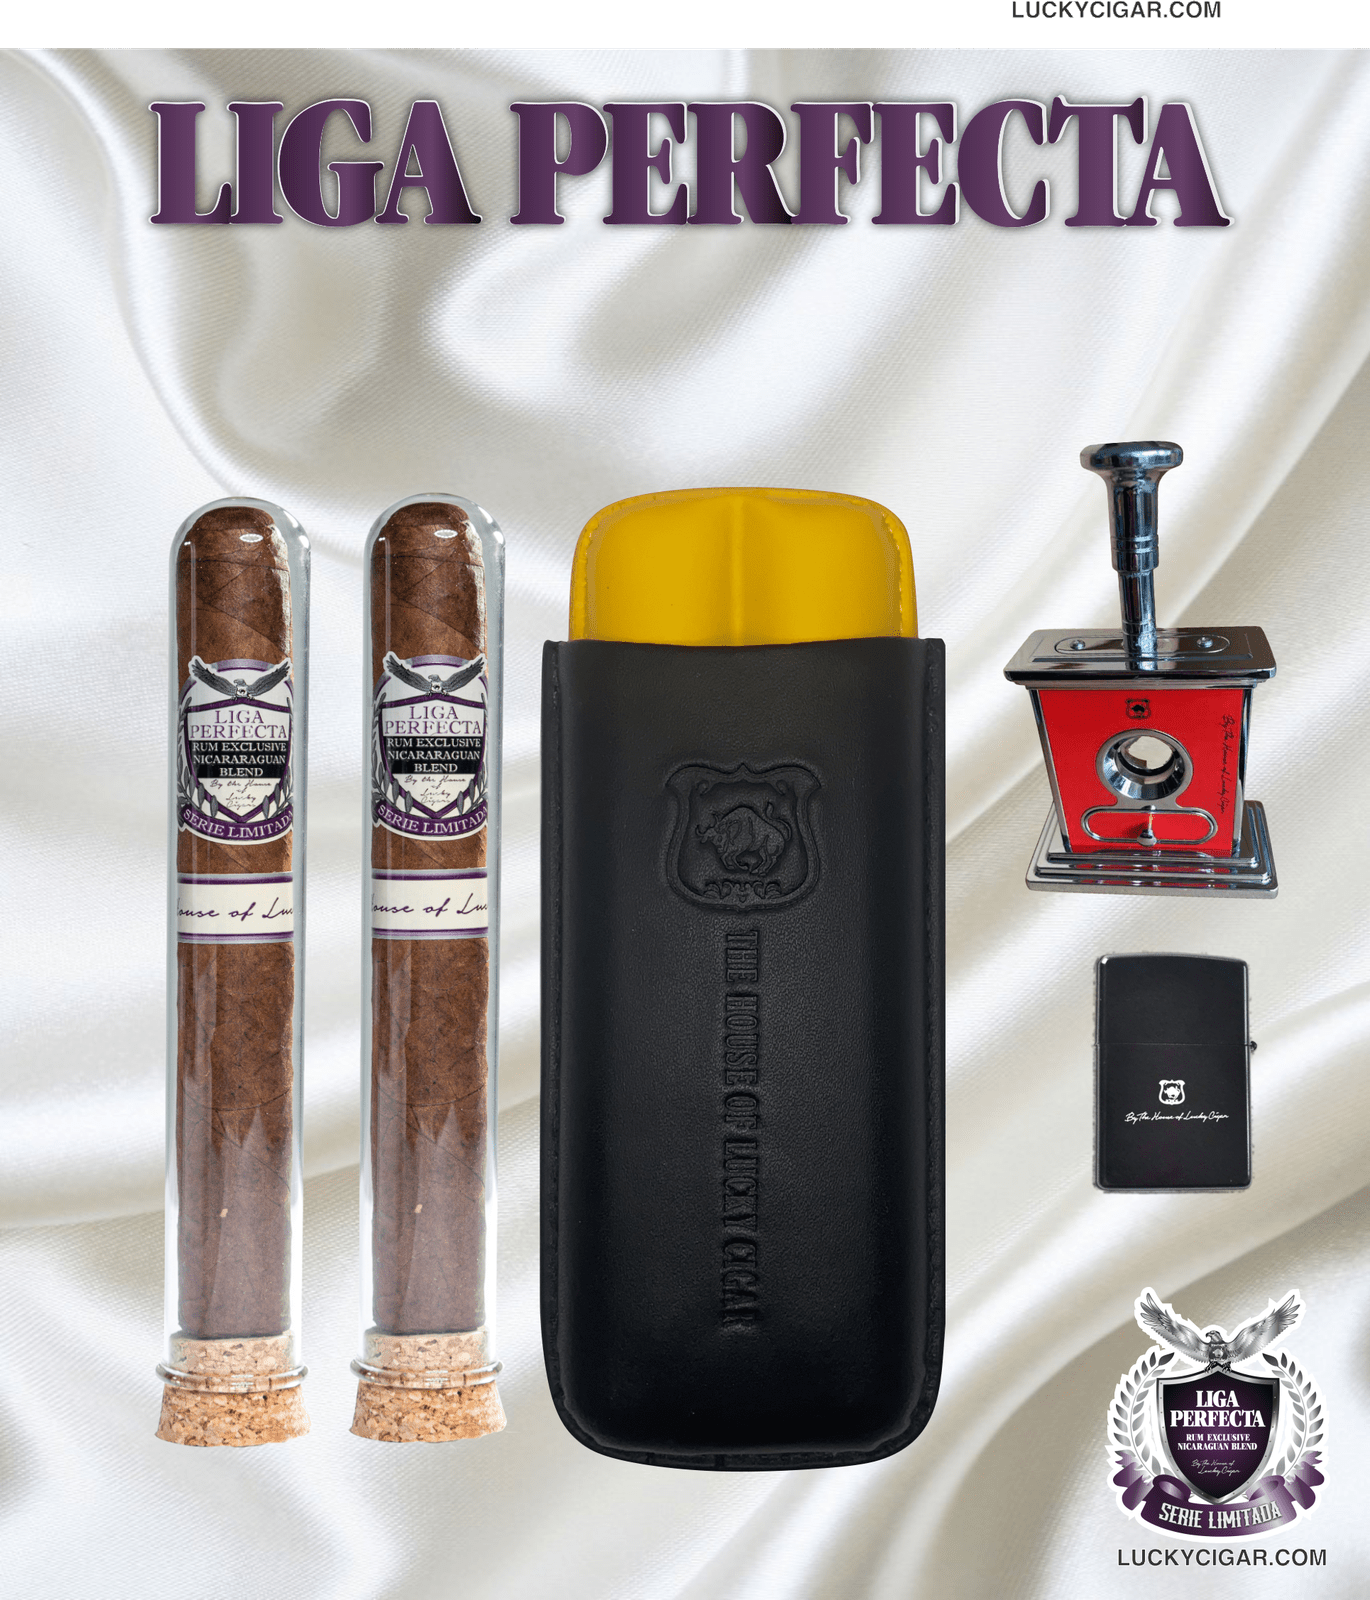 Rum Cigars: Liga Perfecta Set - 2 Habano Toro Cigars in Glass with Humidor, Cutter, Lighter